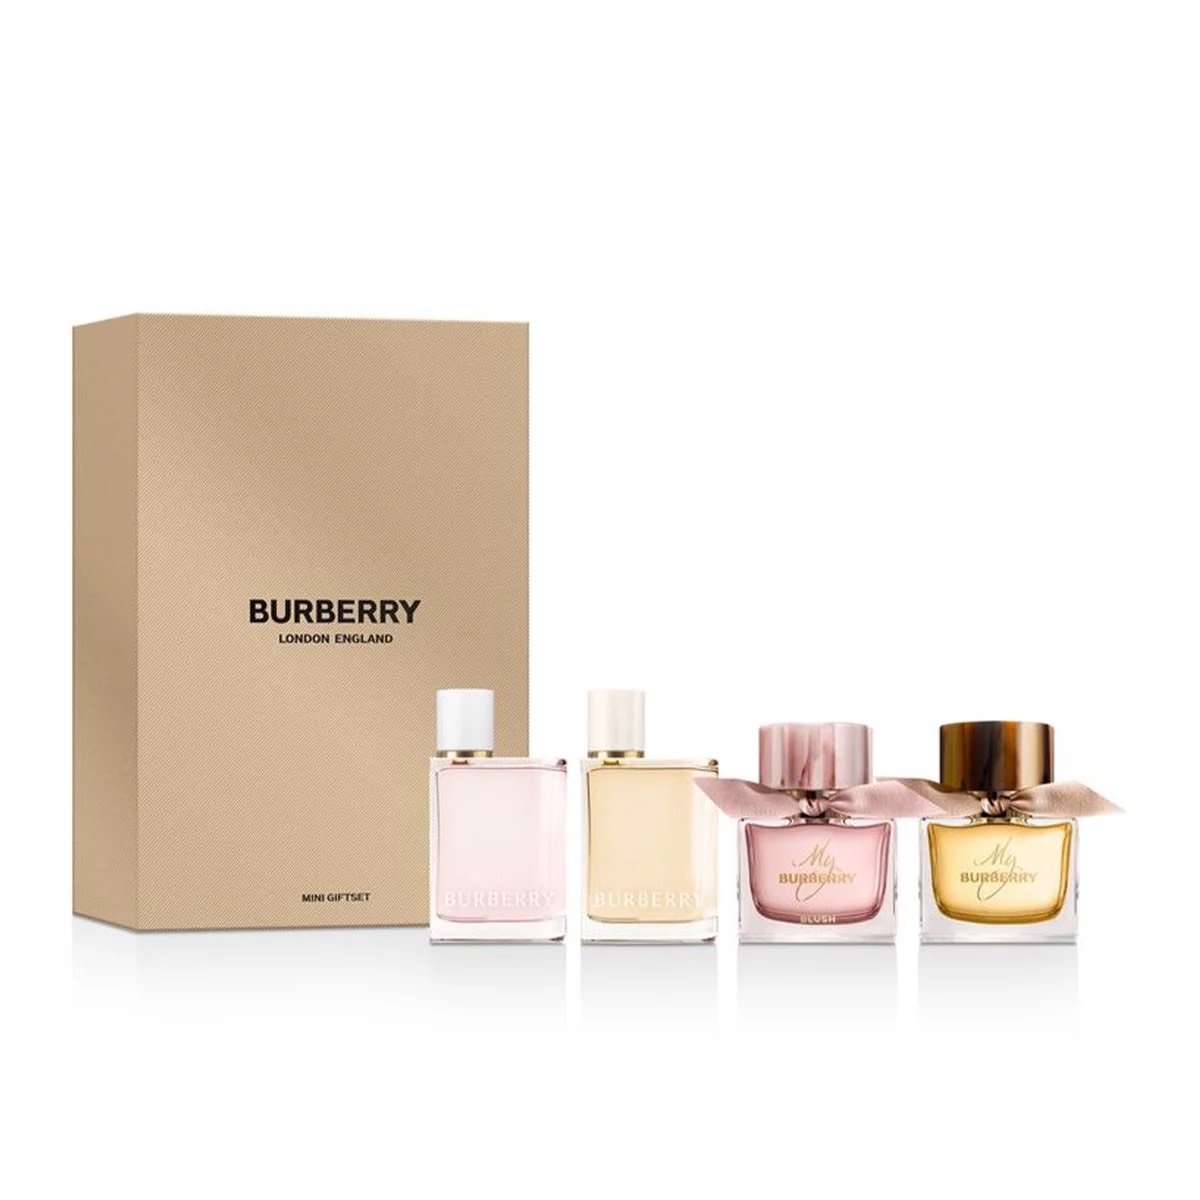 Actualizar 105+ imagen burberry perfume set